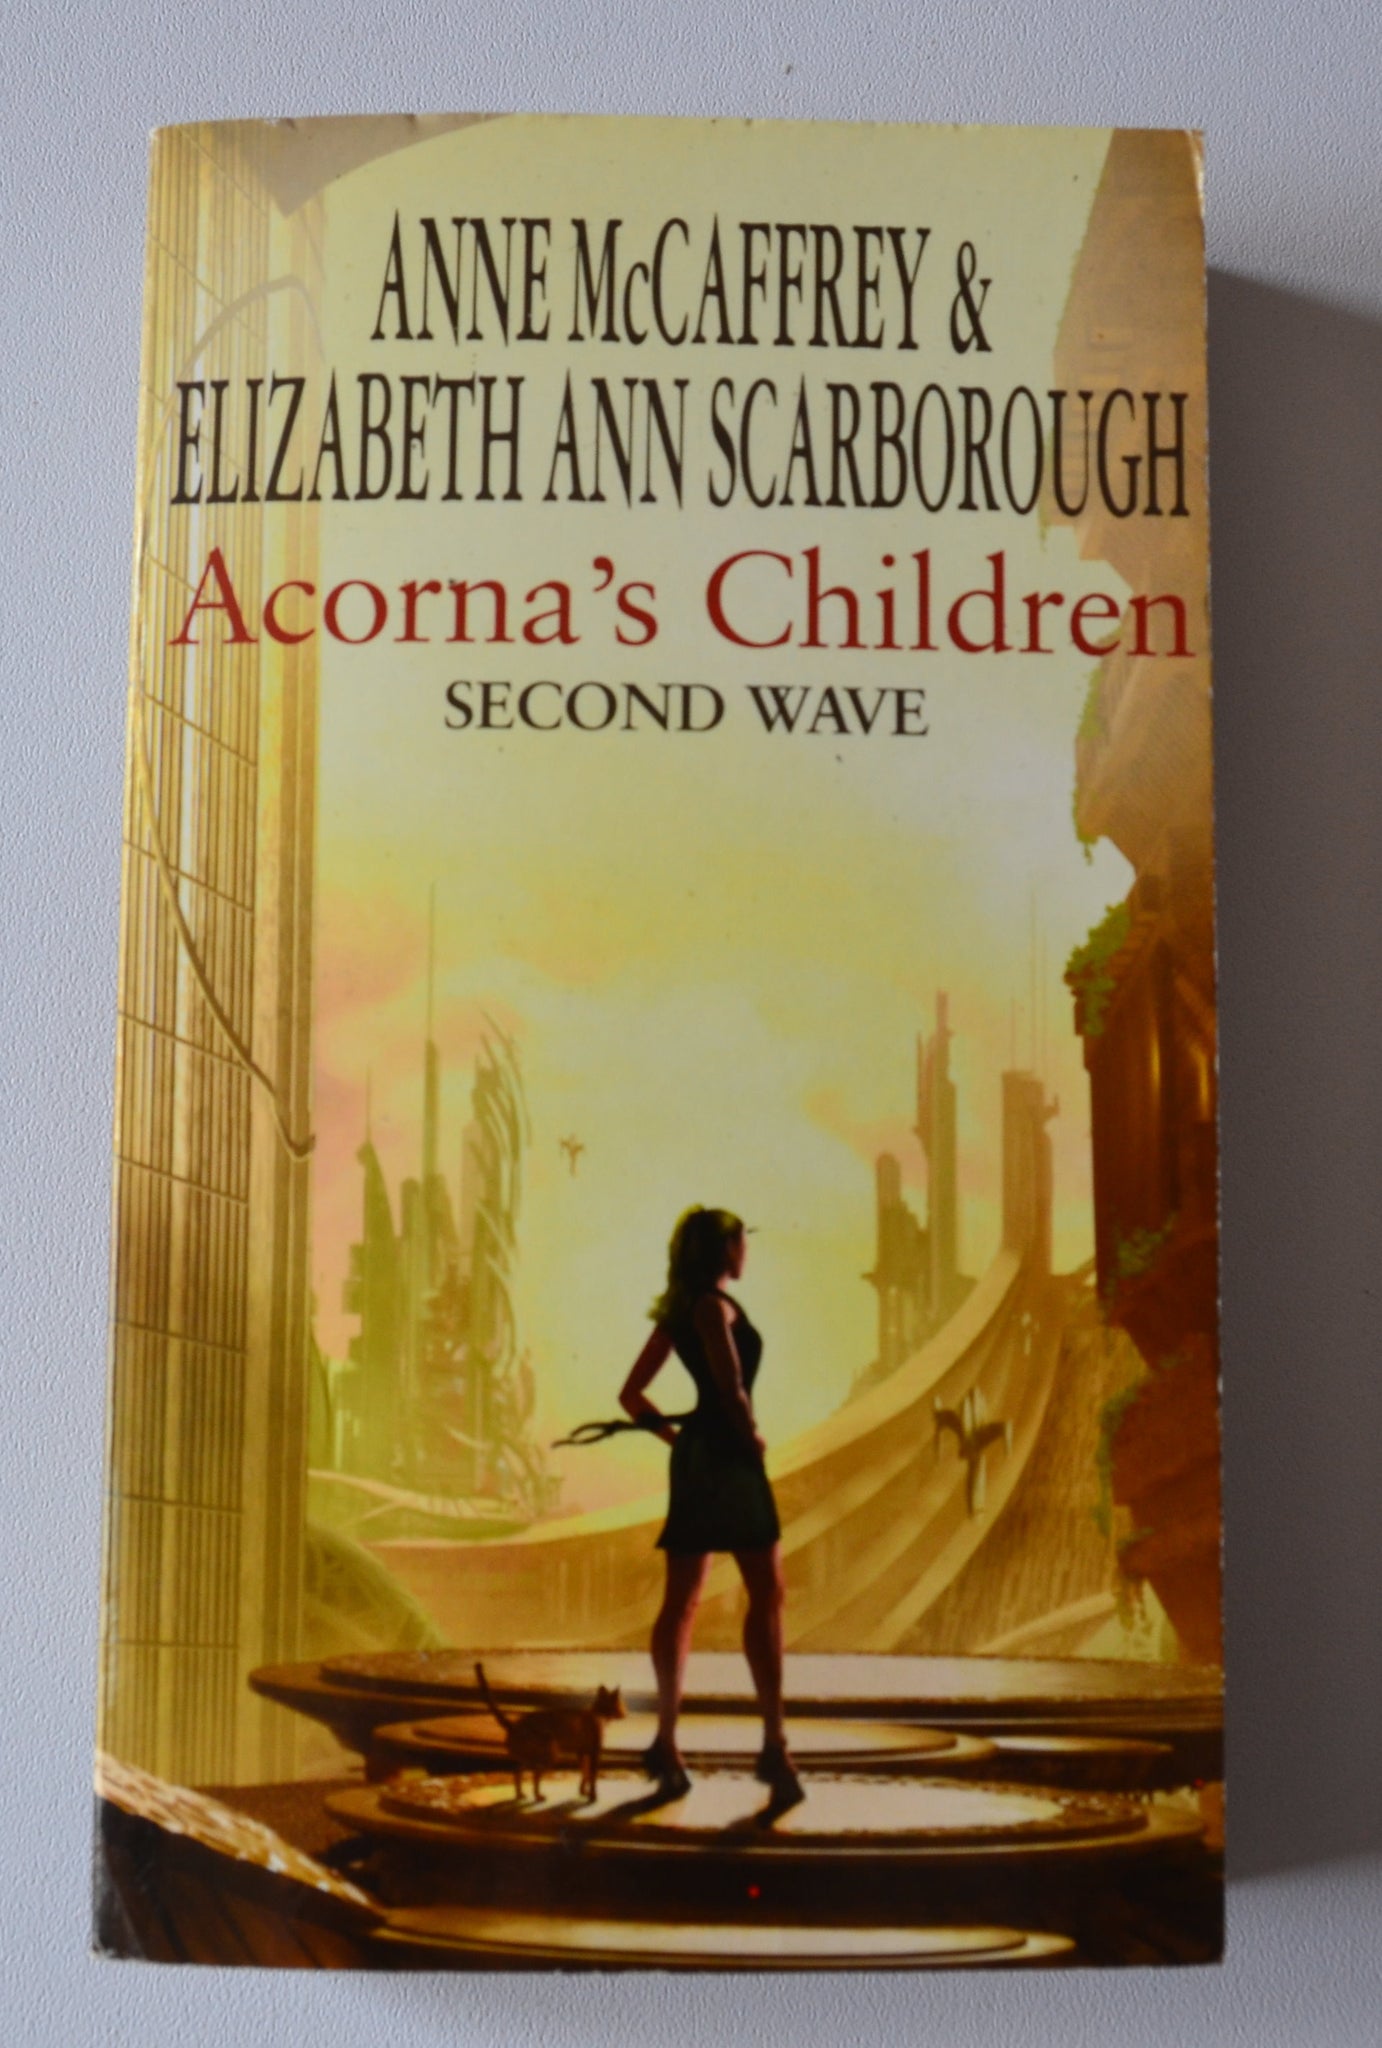 Second Wave Acorna's Children - Acorna's Children book 2